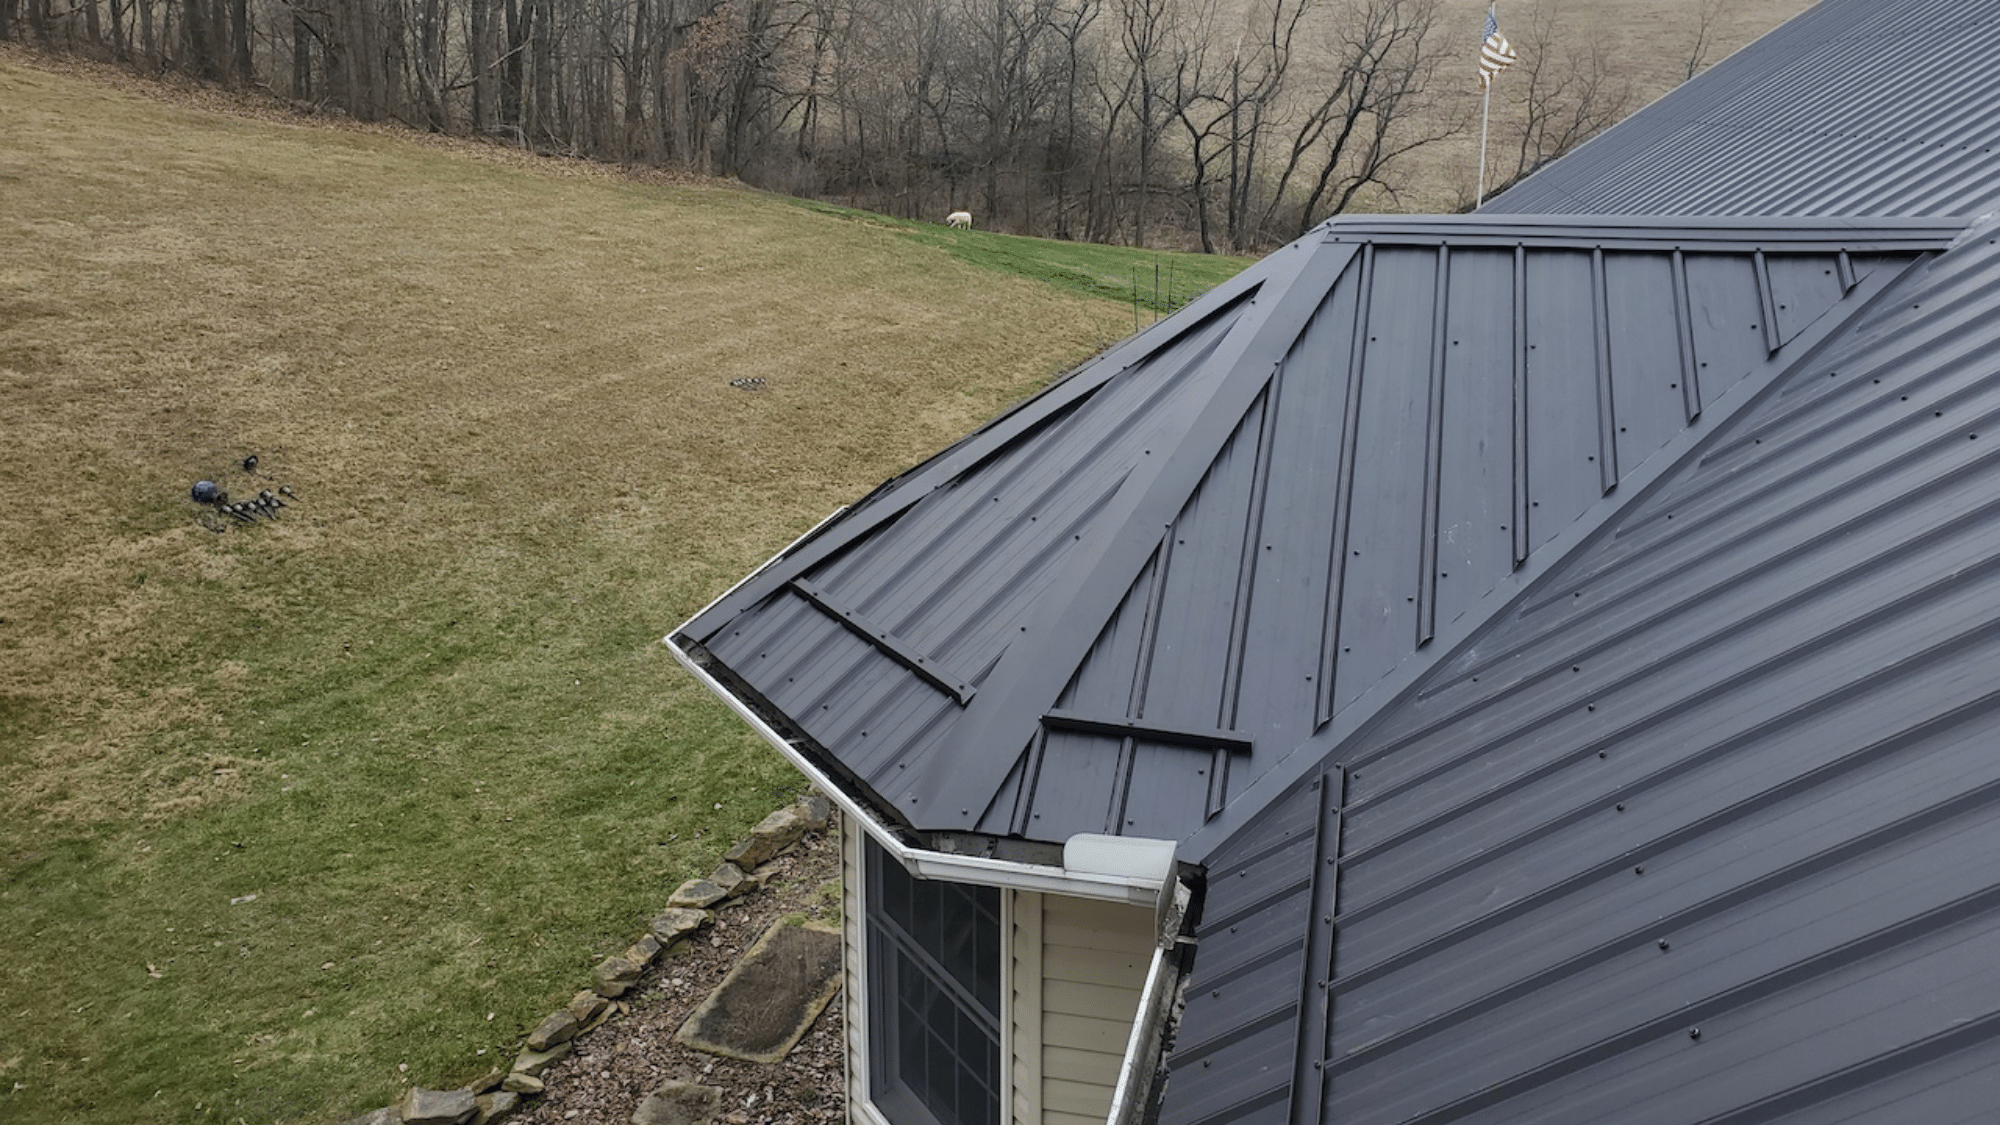 Strasburg Roof Types - Summary